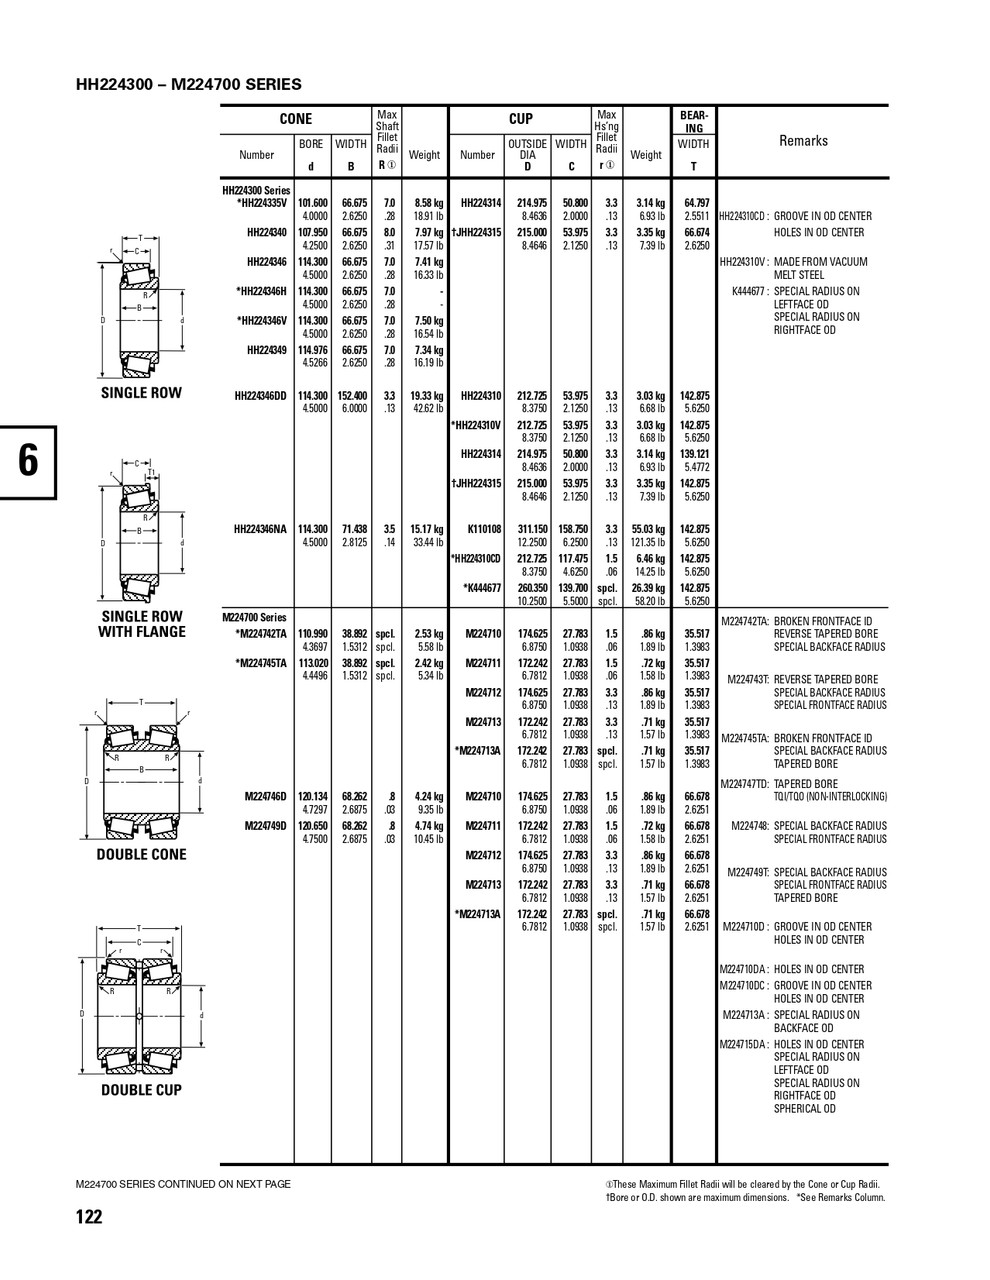 Timken® Single Row Cup - Precision Class  M224710-3